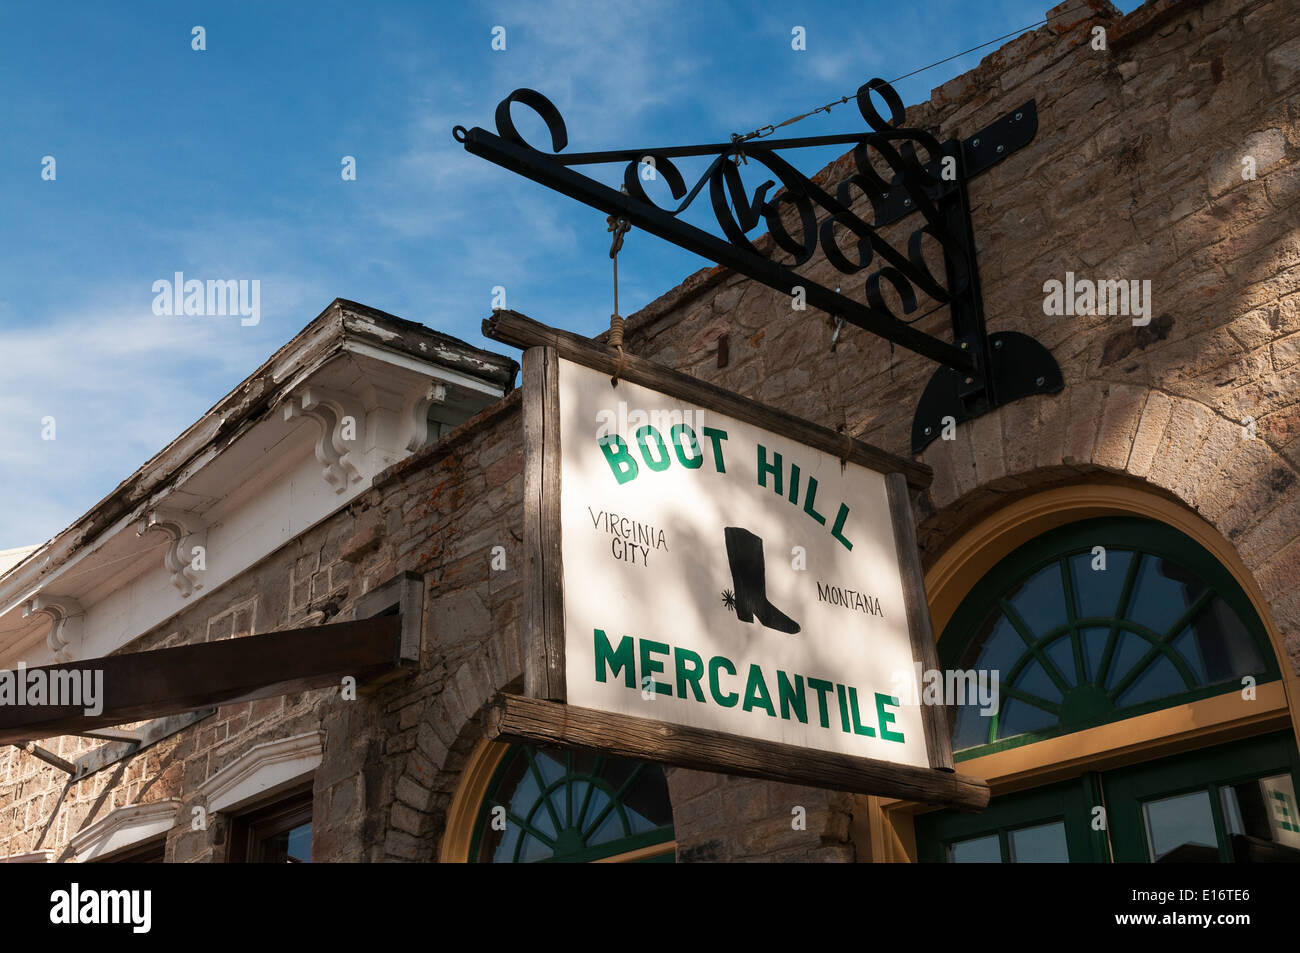 Montana, Virginia City, National Historic Landmark, 19C gold mining town, shop sign Stock Photo